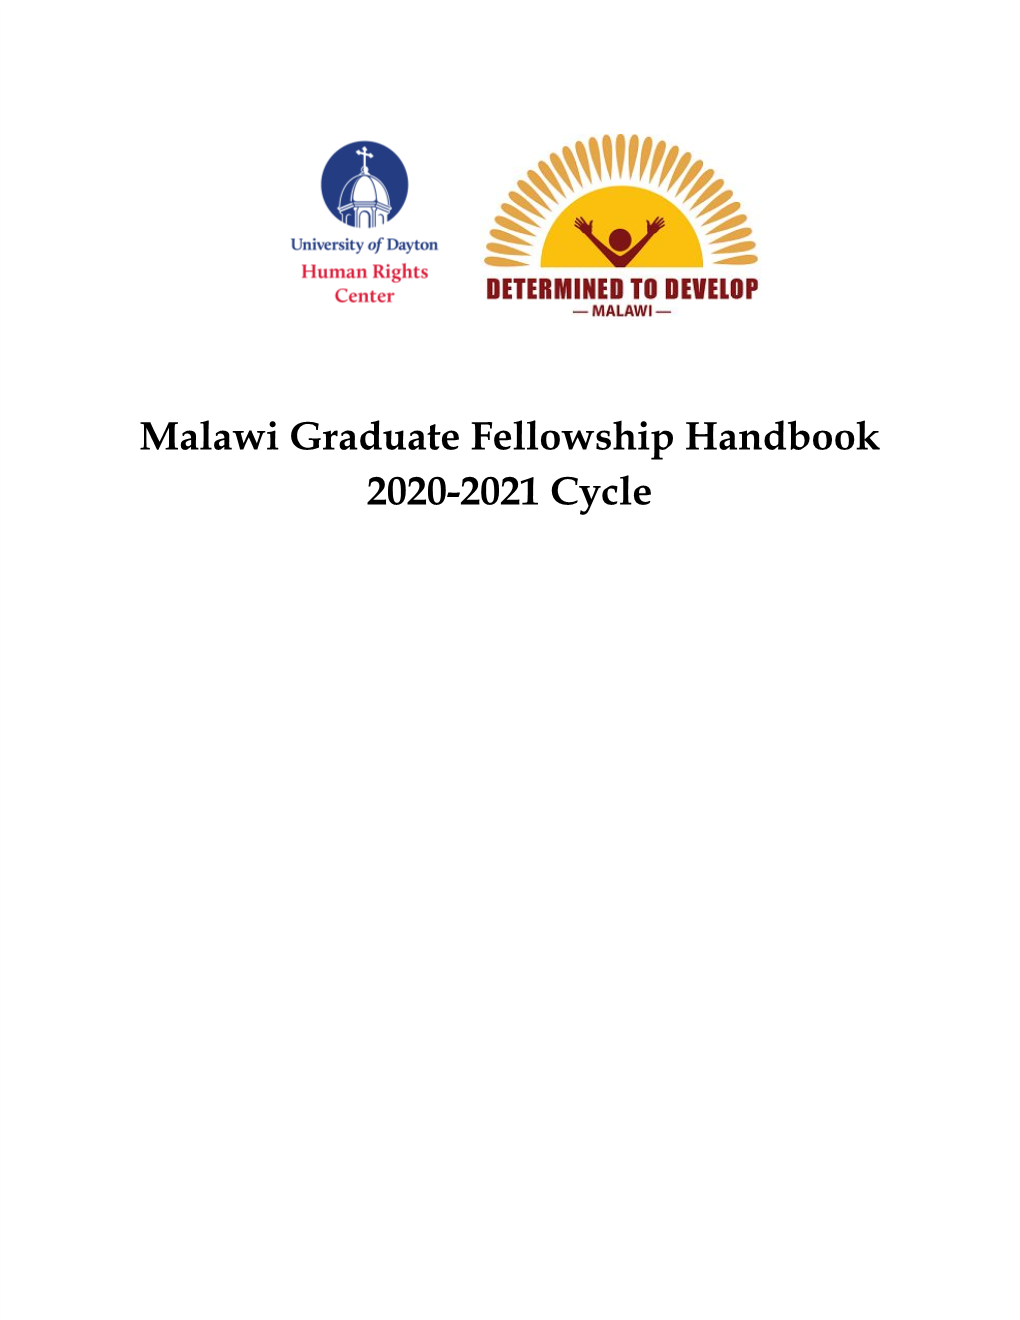 Malawi Graduate Fellowship Handbook 2020-2021 Cycle